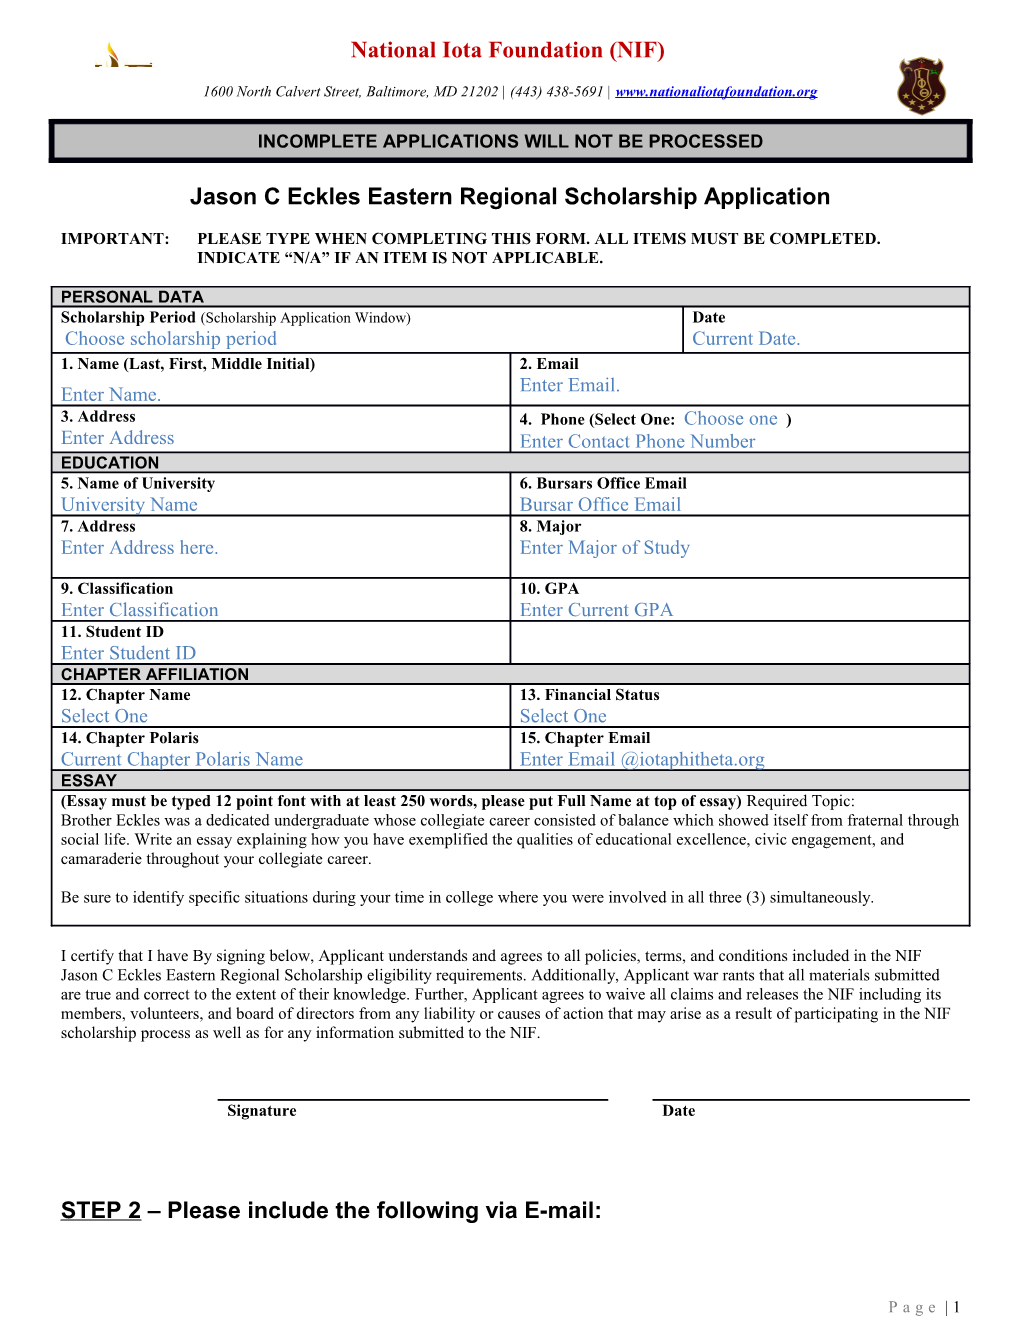 Jason C Eckleseastern Regional Scholarship Application